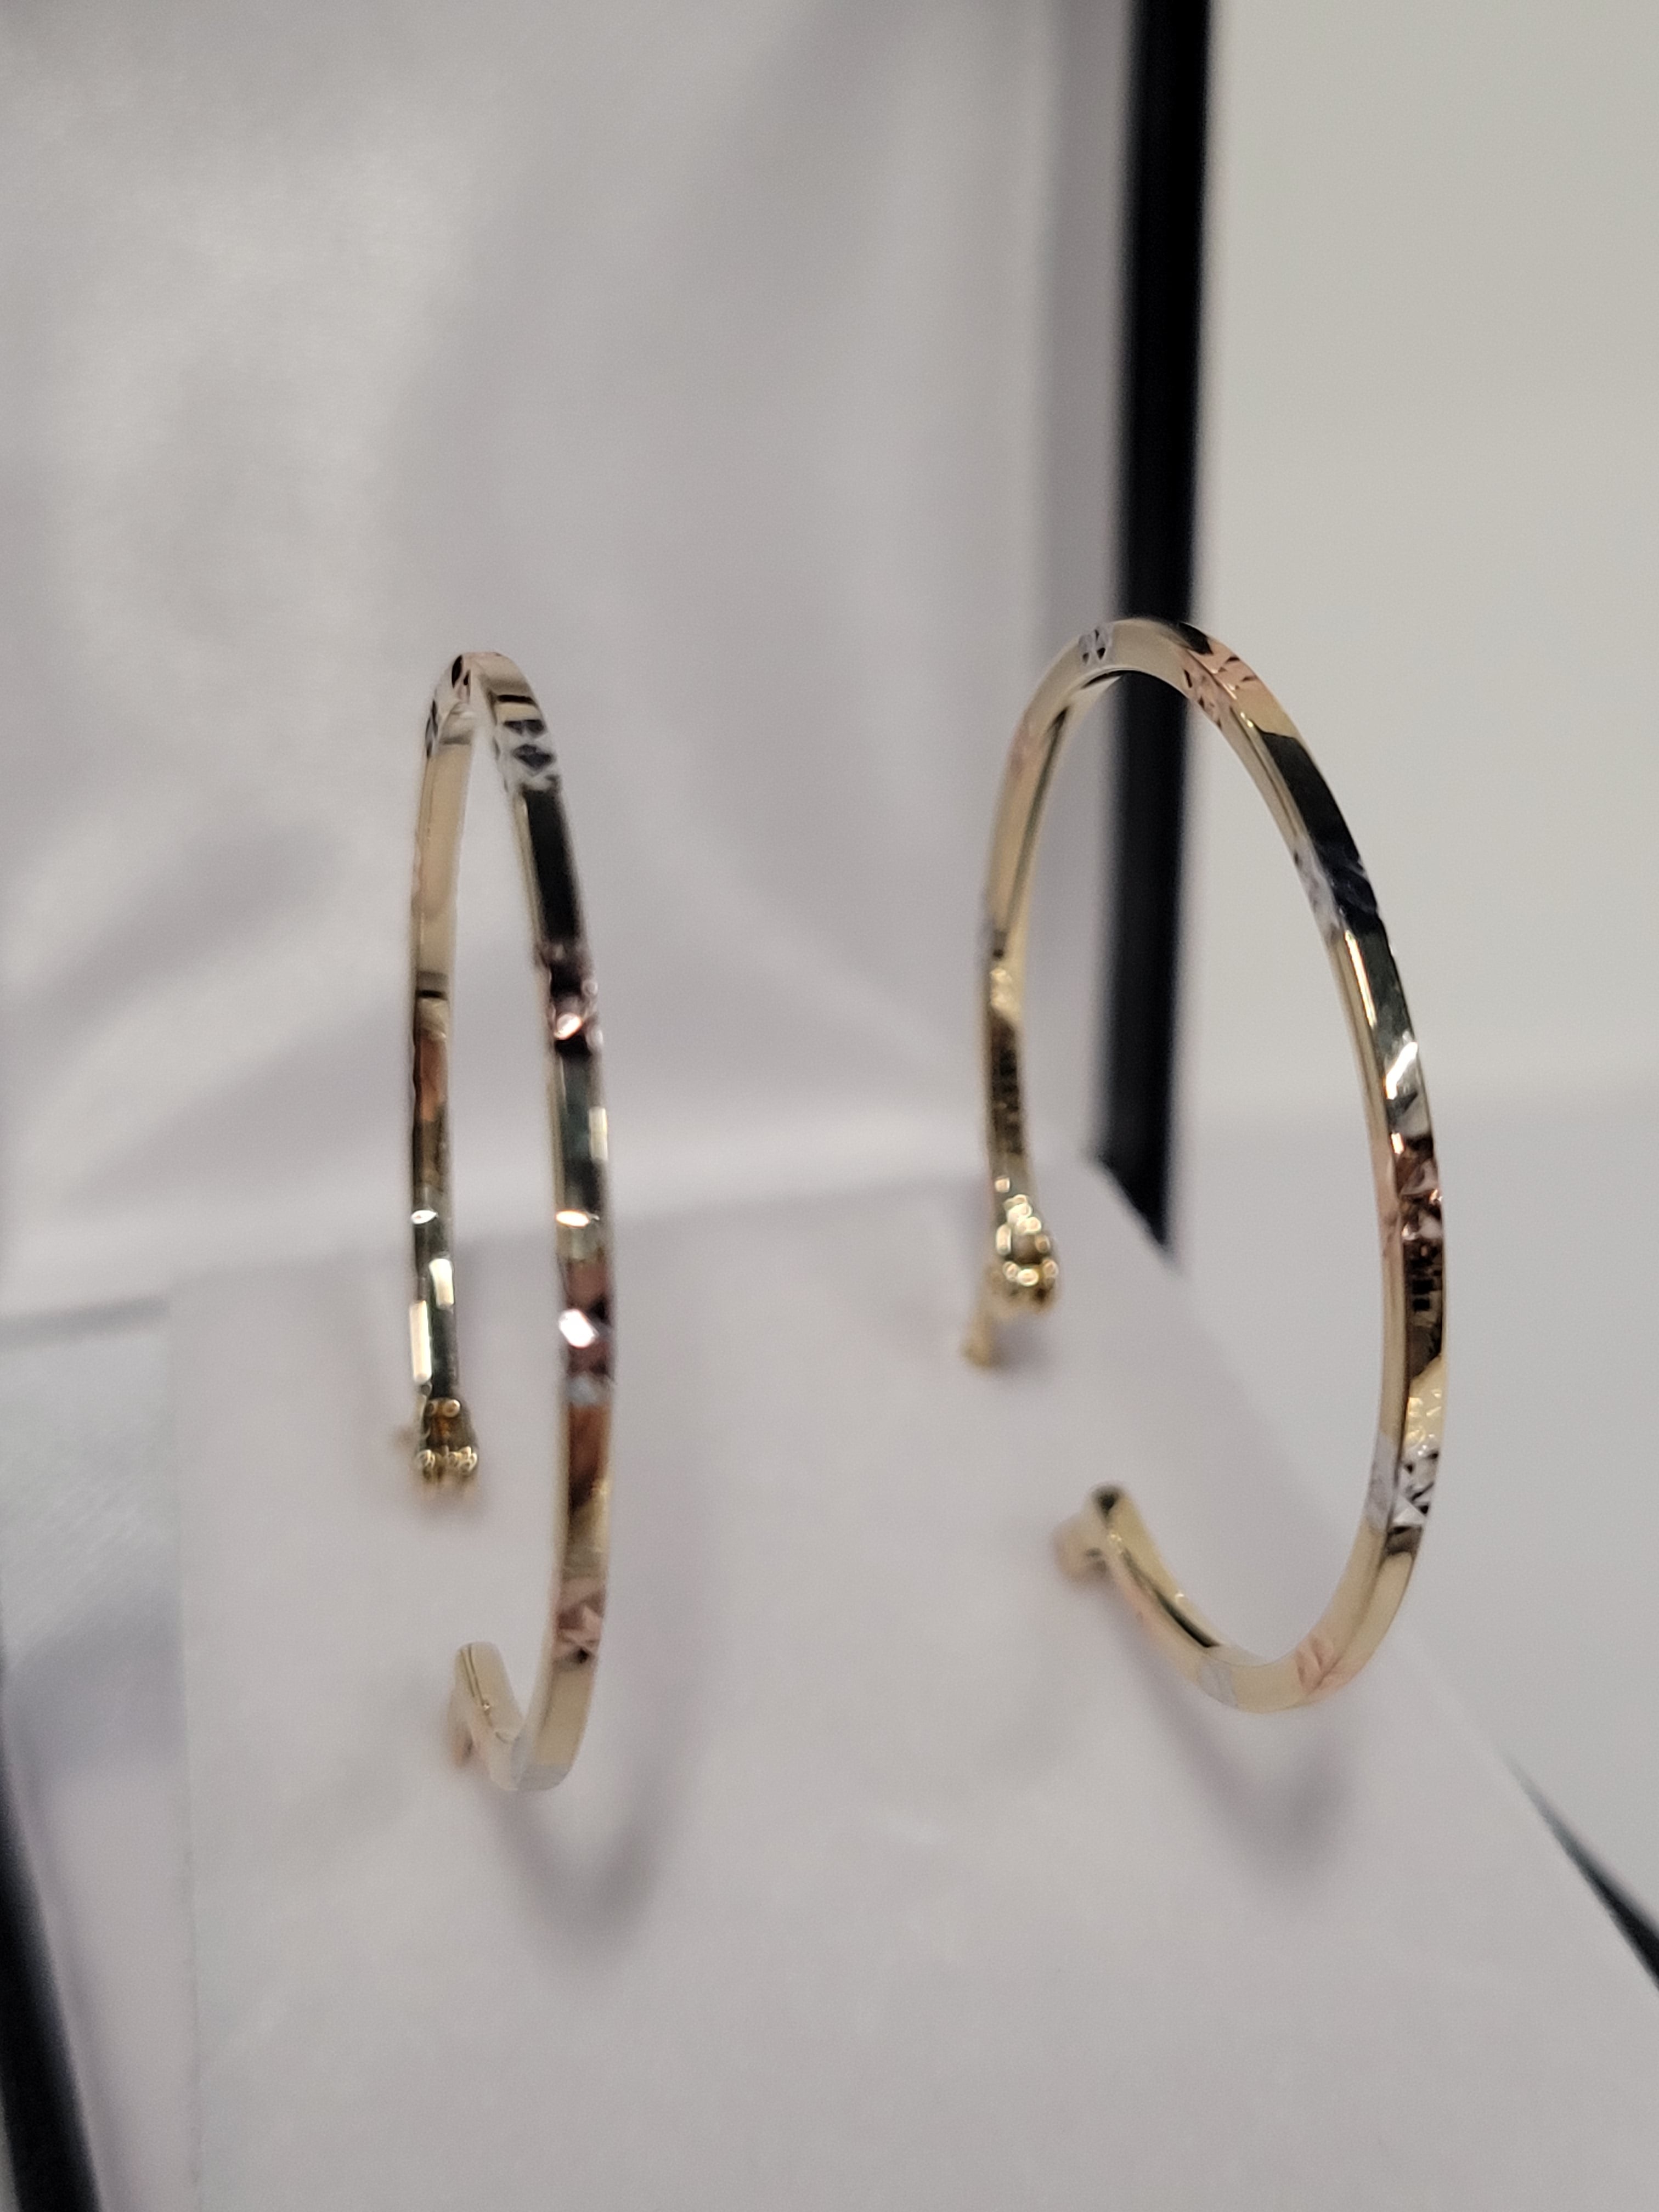 Gold Hoop Earrings Tri-colour 25mm